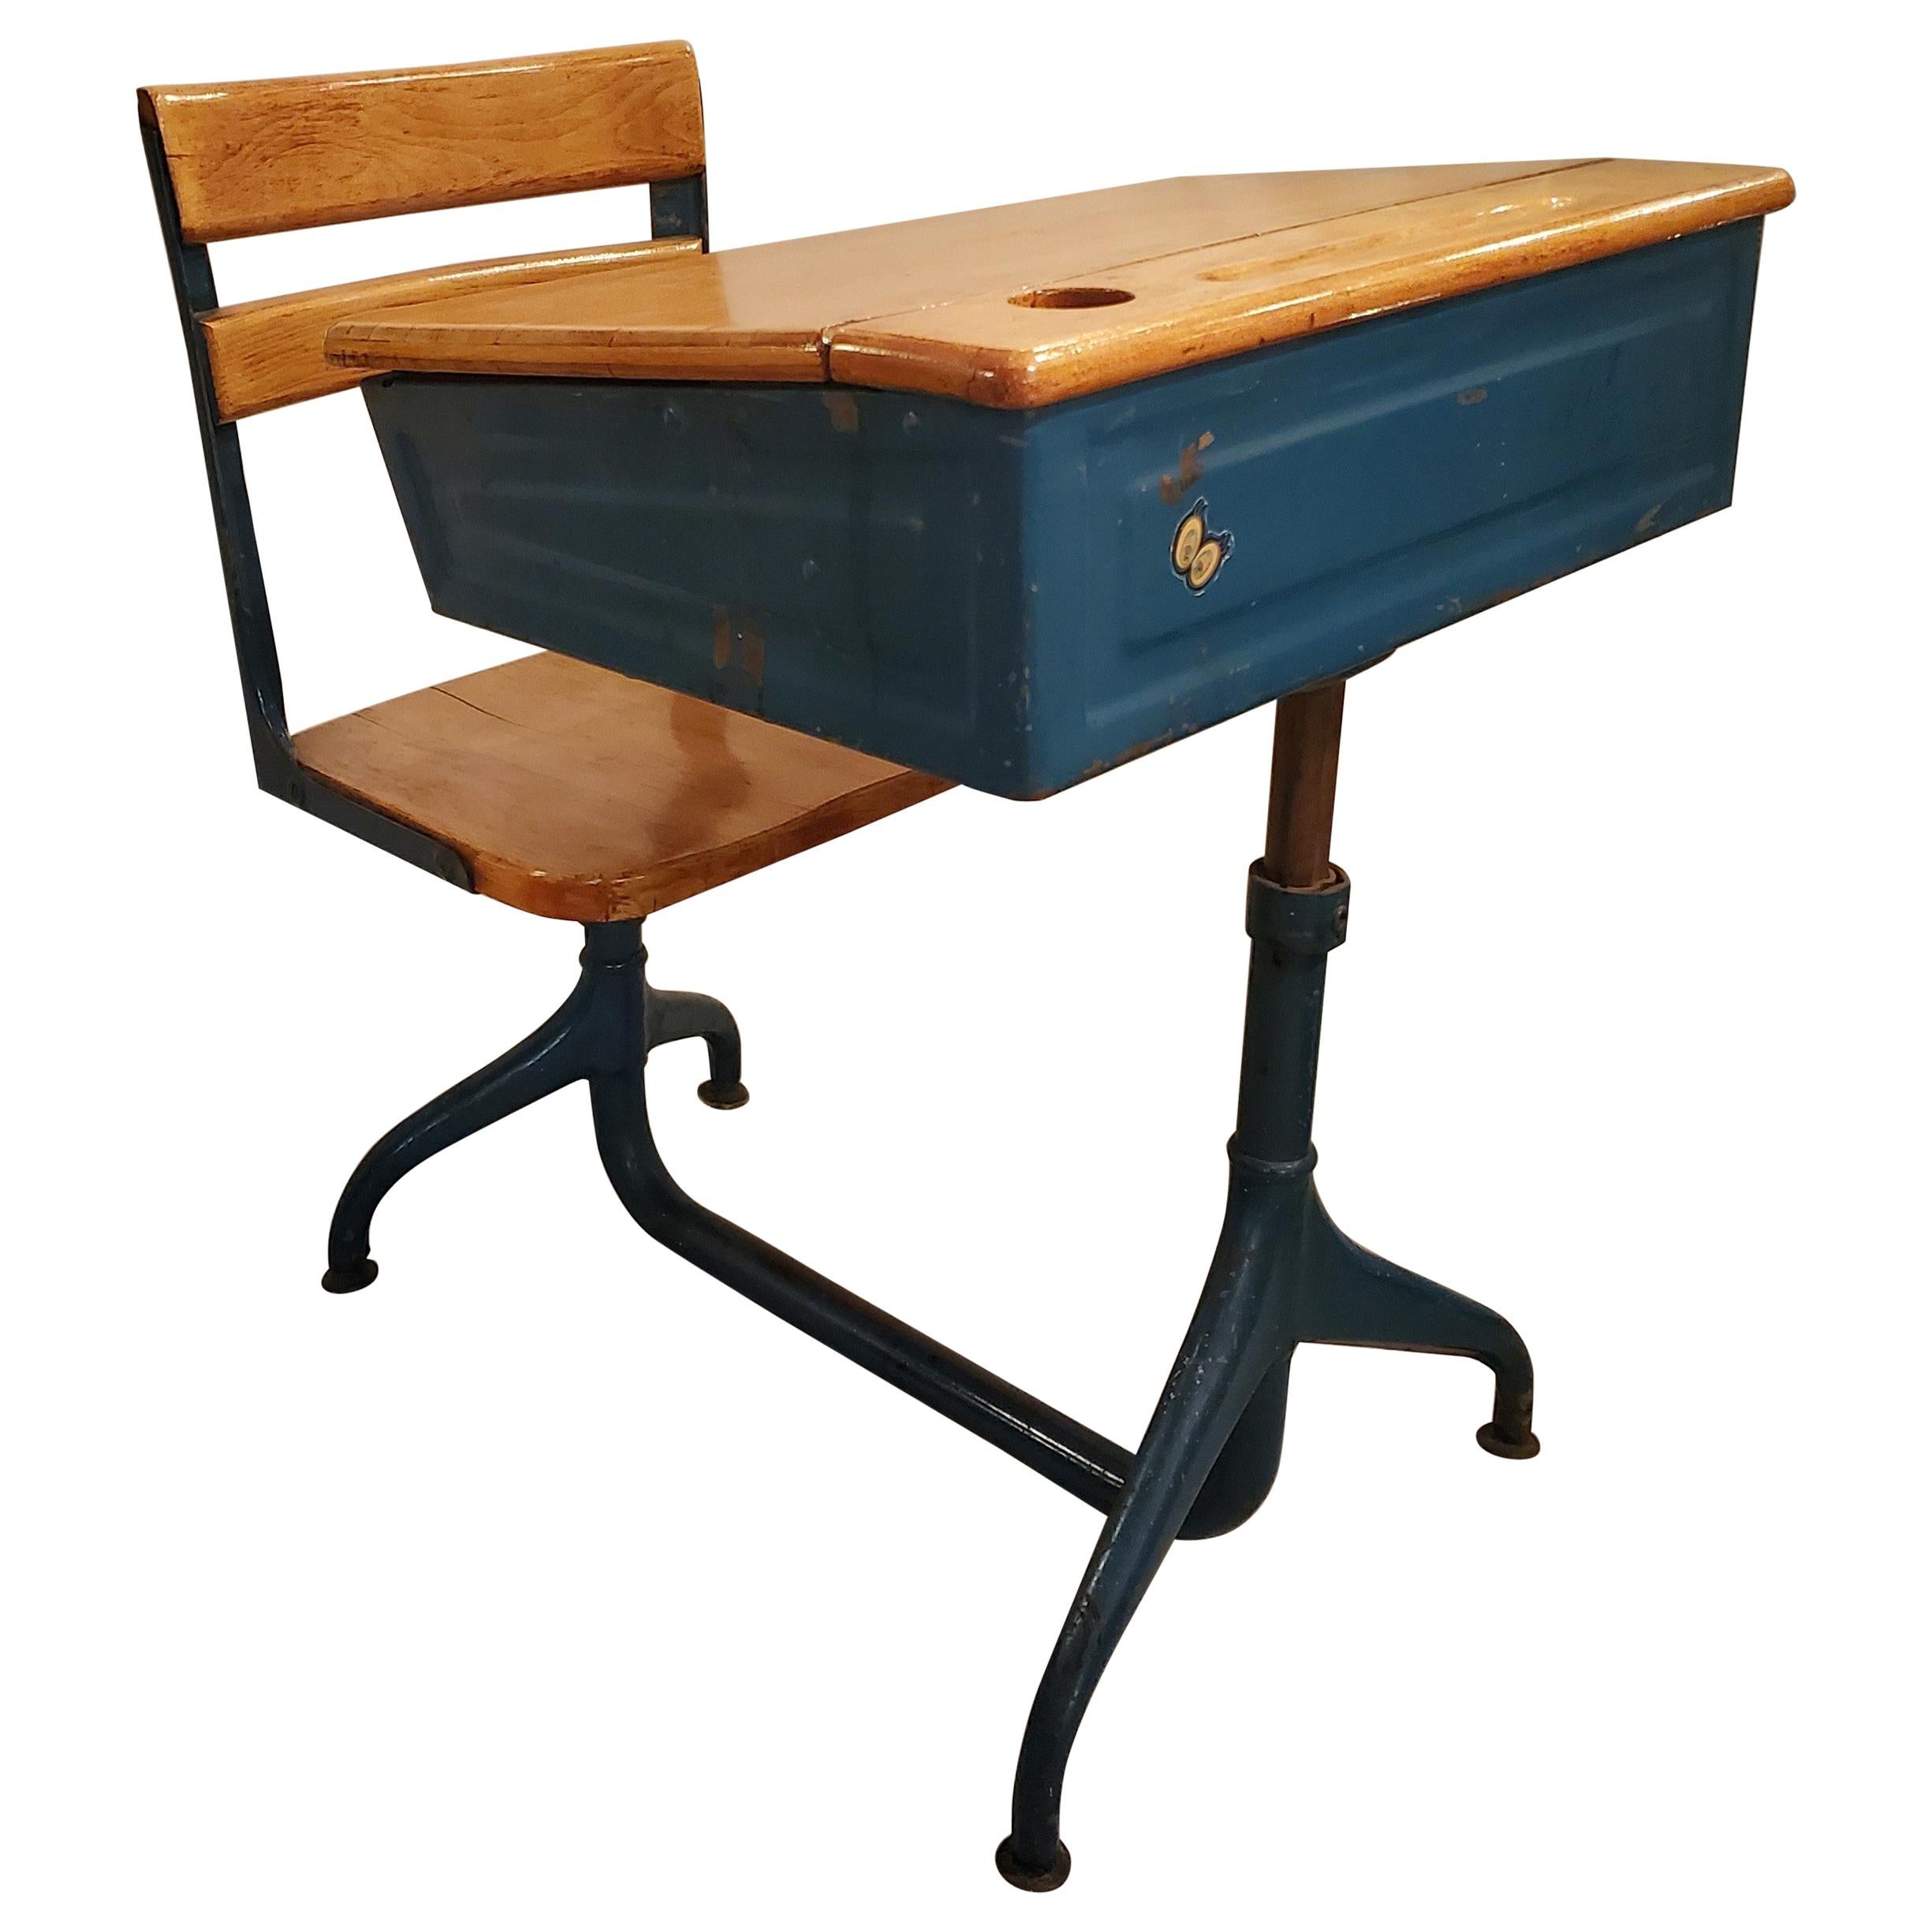 Student Desks All Sizes Details about   Lot of 2 Vintage Student Desk Used School Furniture 